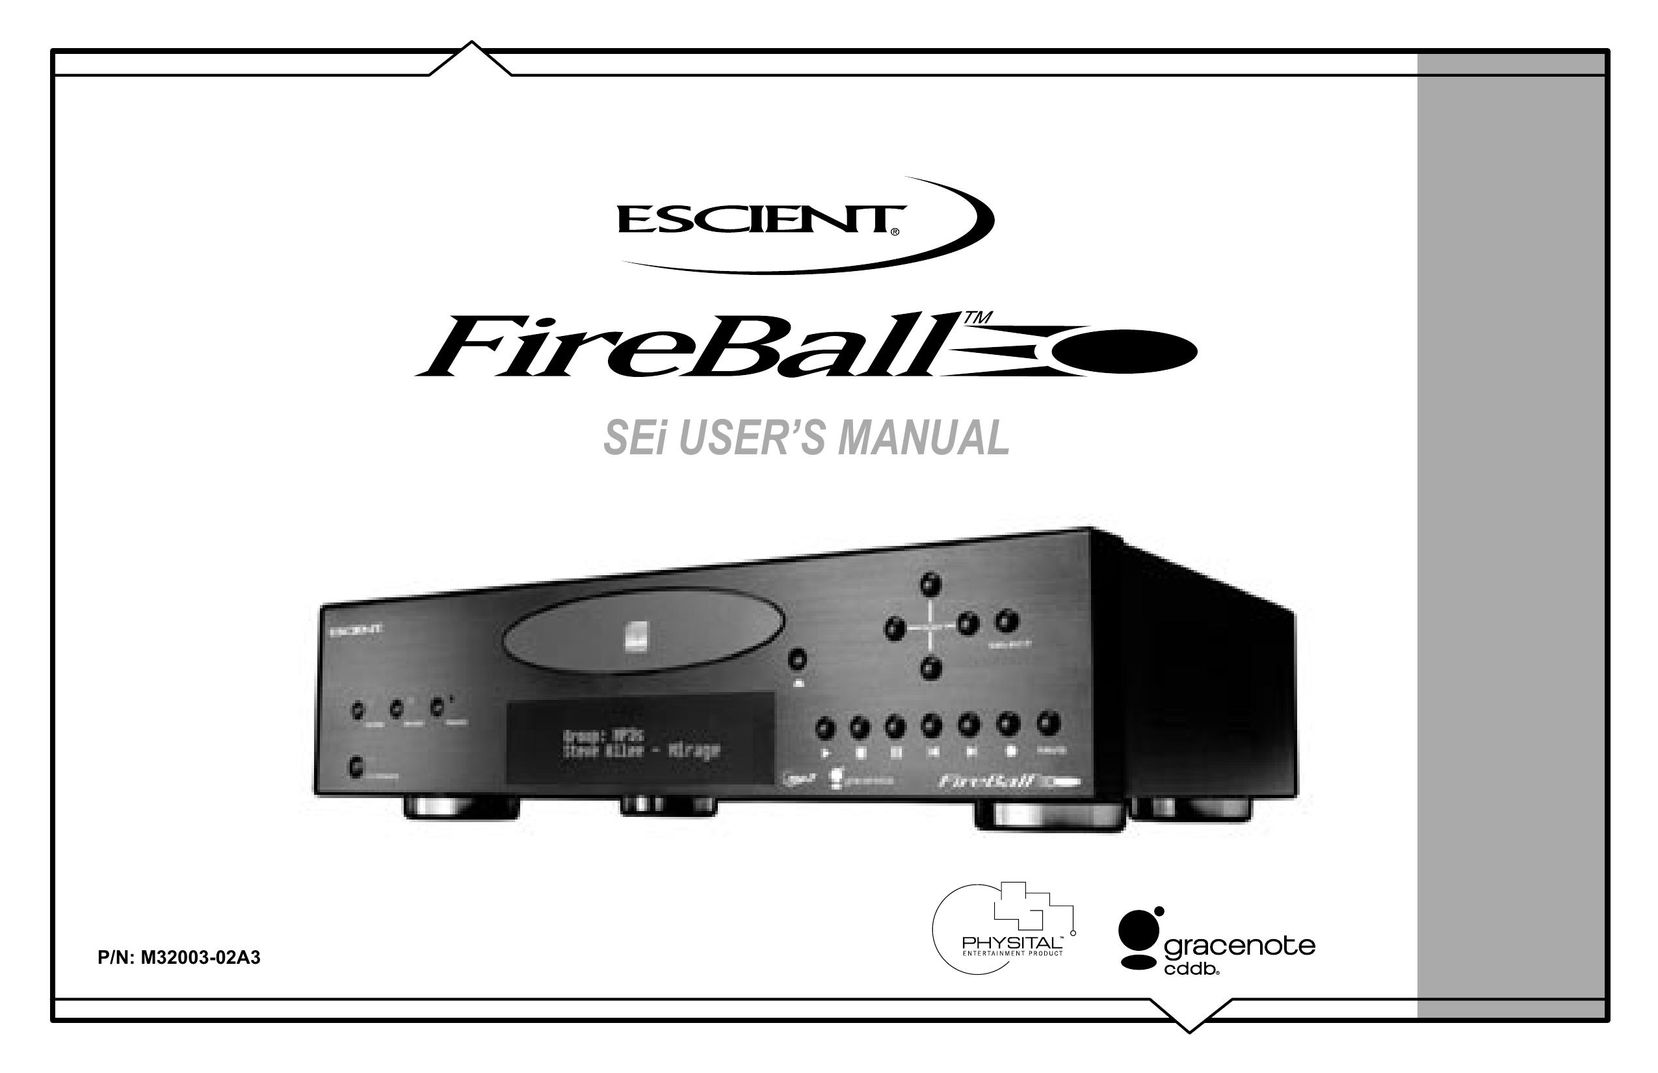 Escient FireBall Media Management system Home Theater Server User Manual